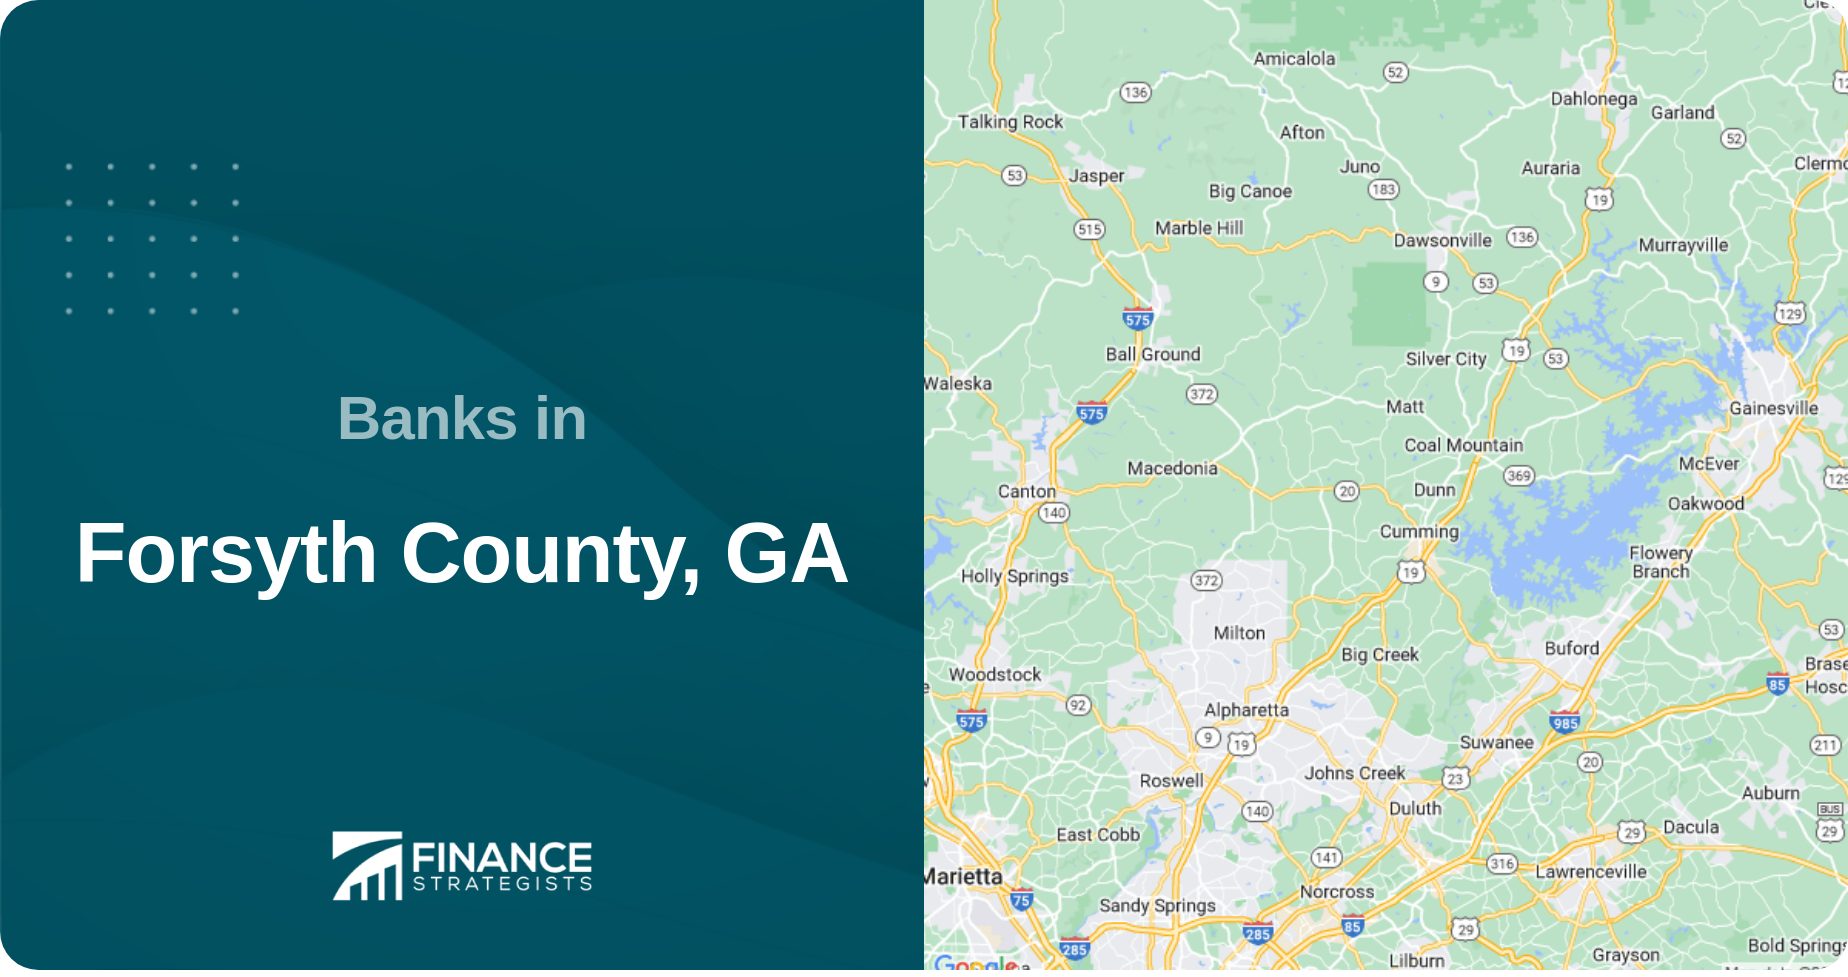 Banks in Forsyth County, GA